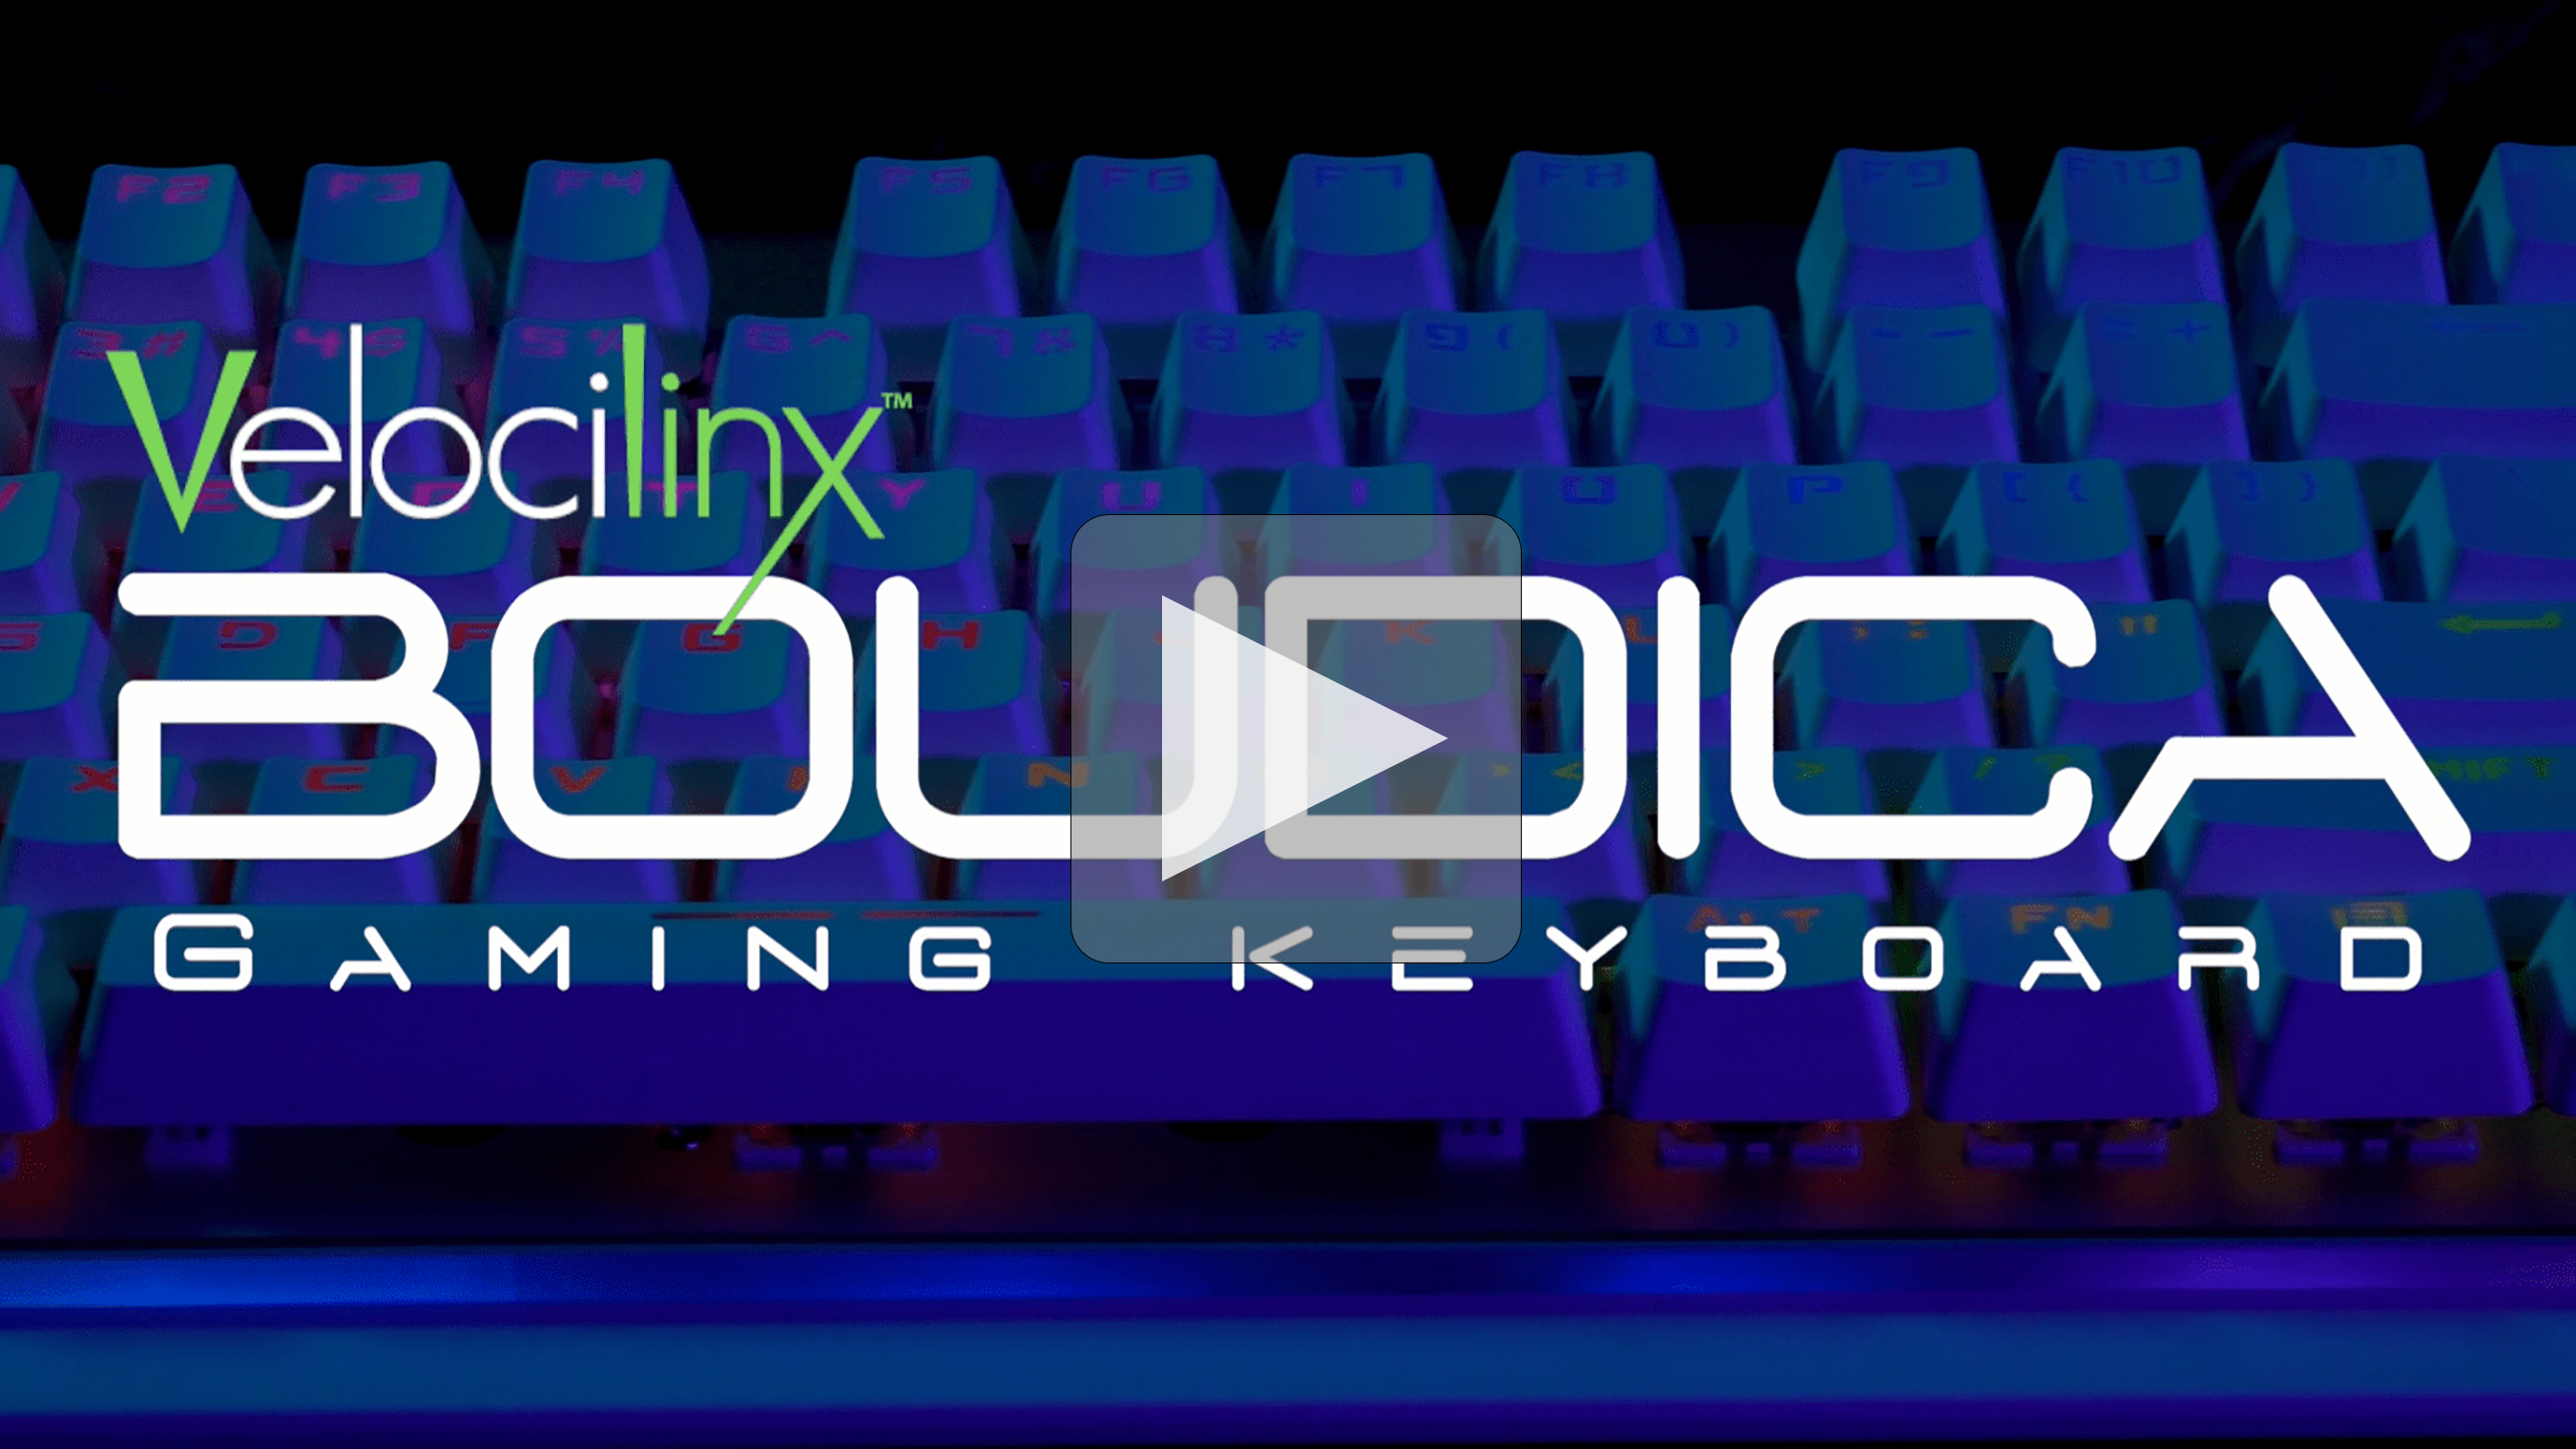 Boudica Keyboard Video